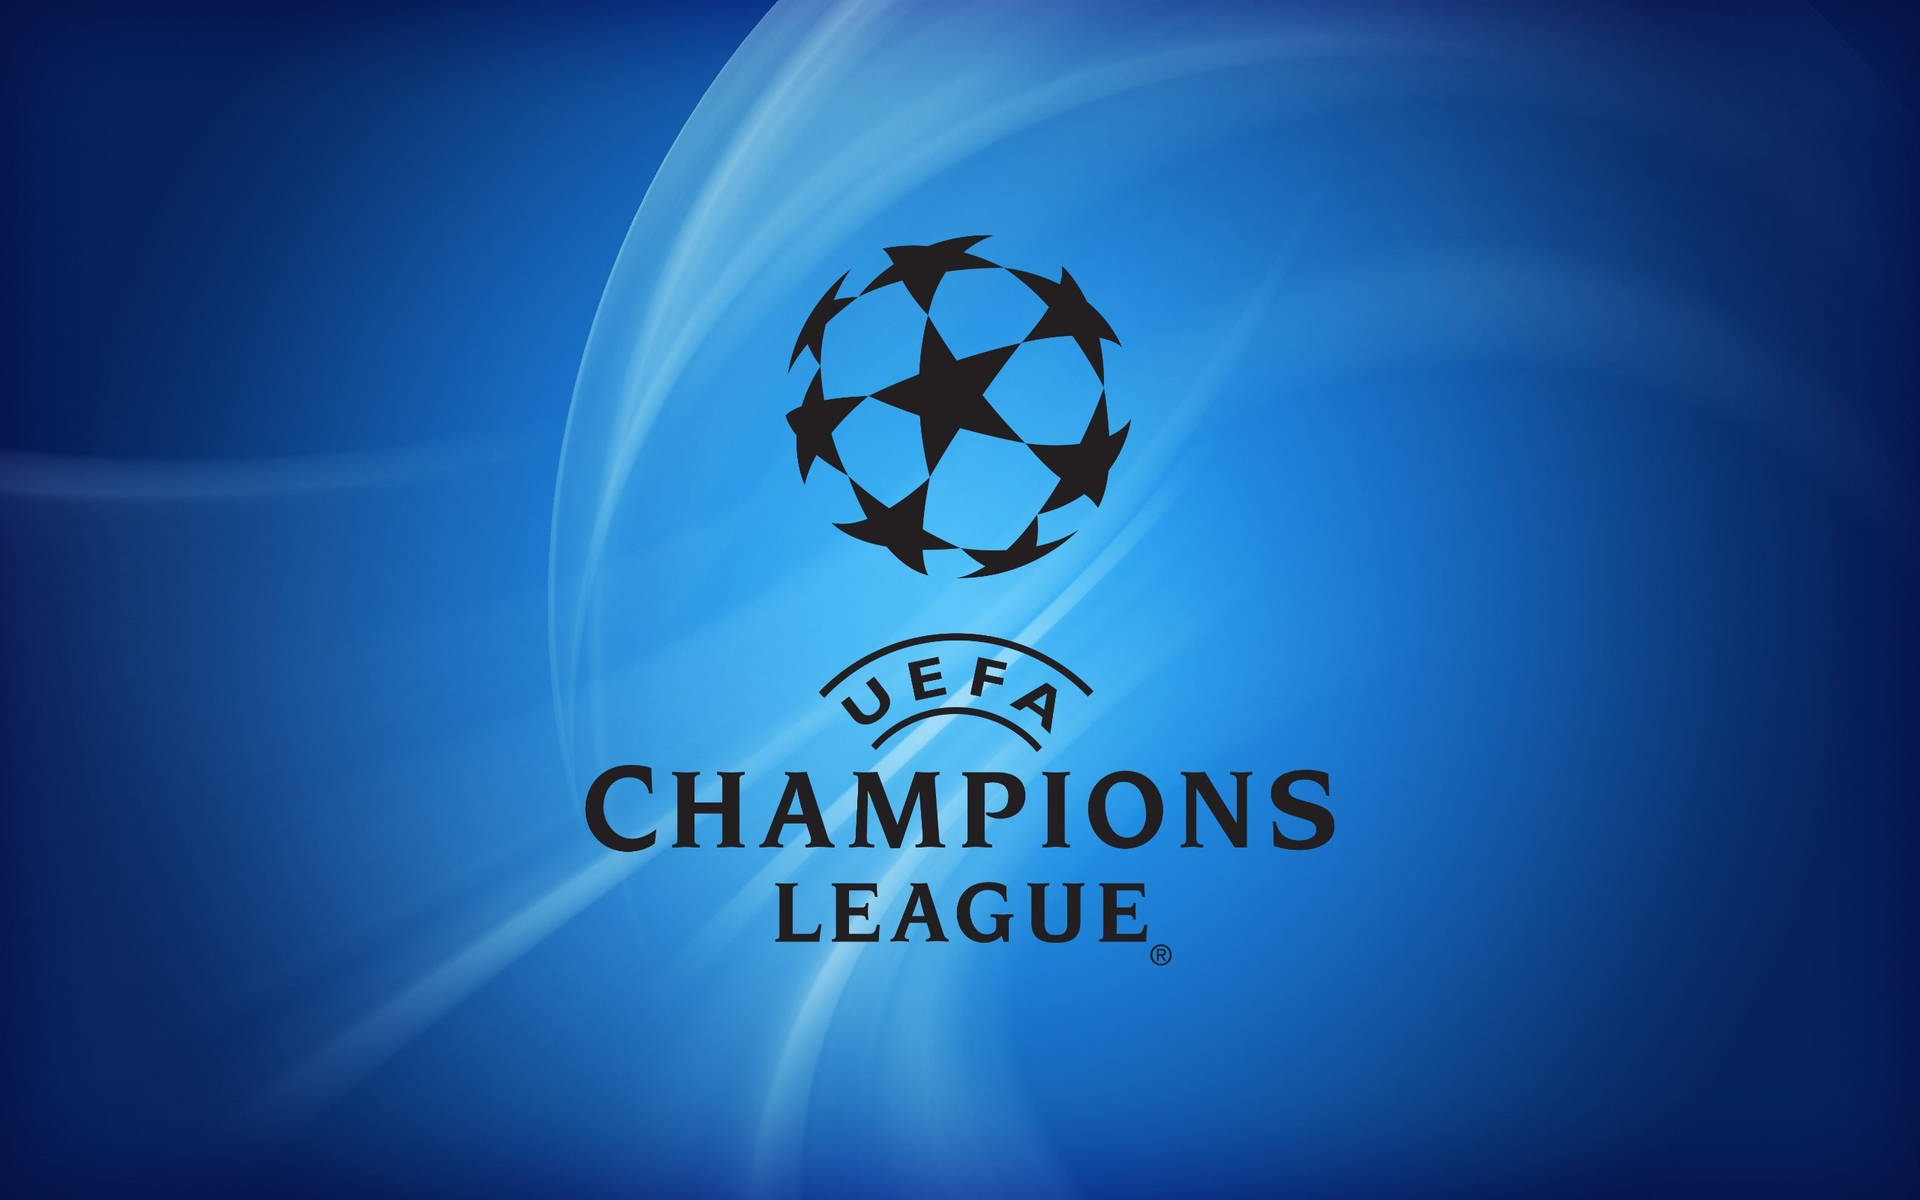 Uefa Champions League Blue Football Background